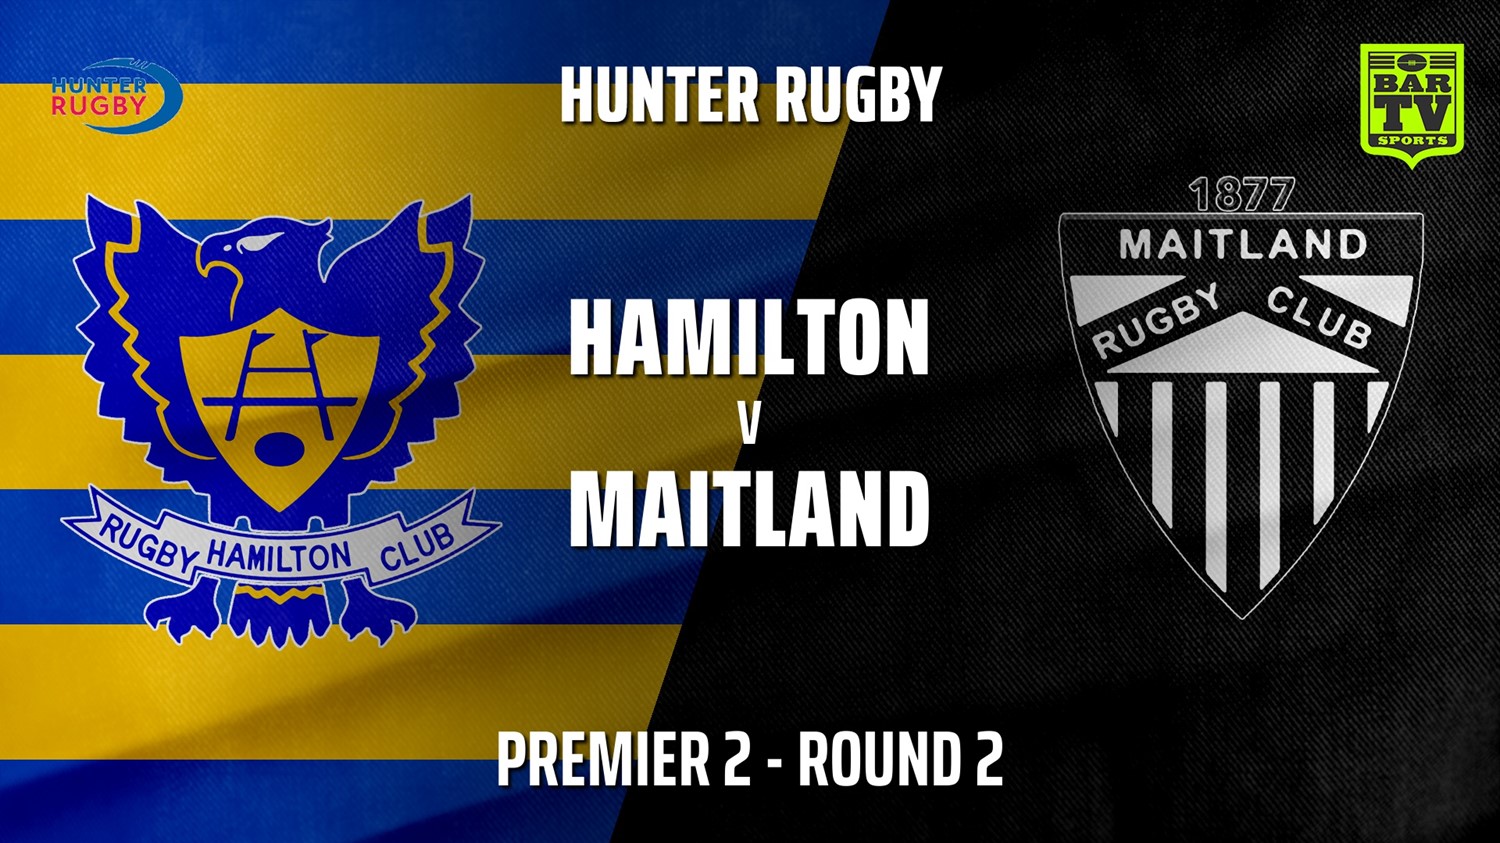 210421-HRU Round 2 - Premier 2 - Hamilton Hawks v Maitland Slate Image